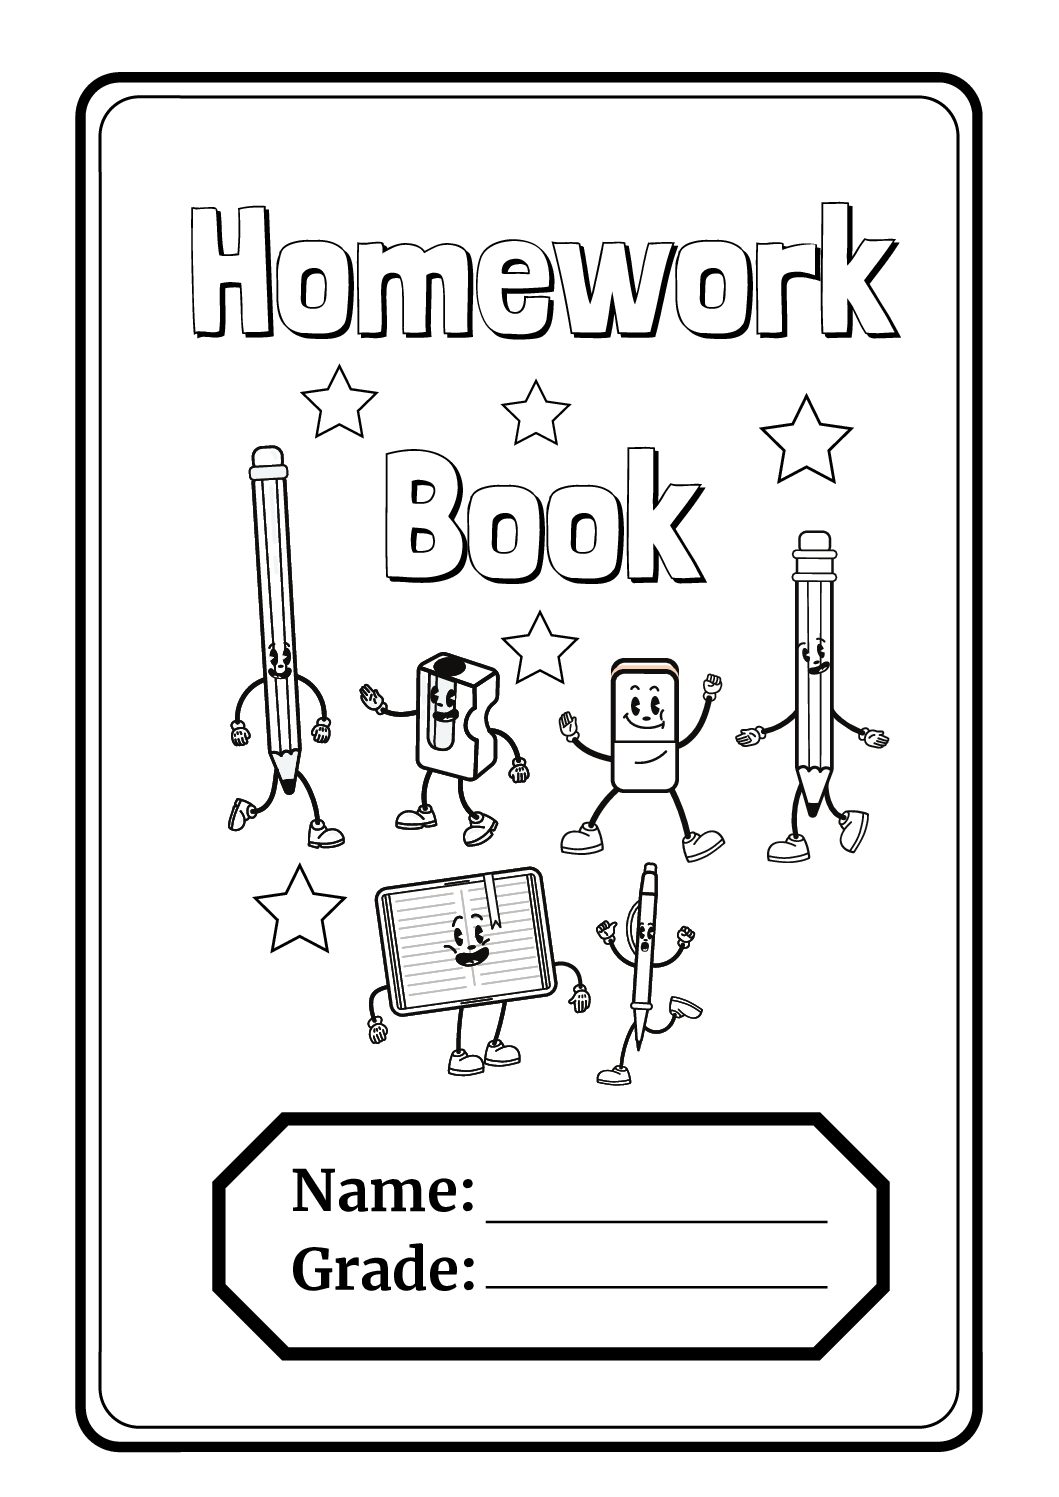 homework book drawing